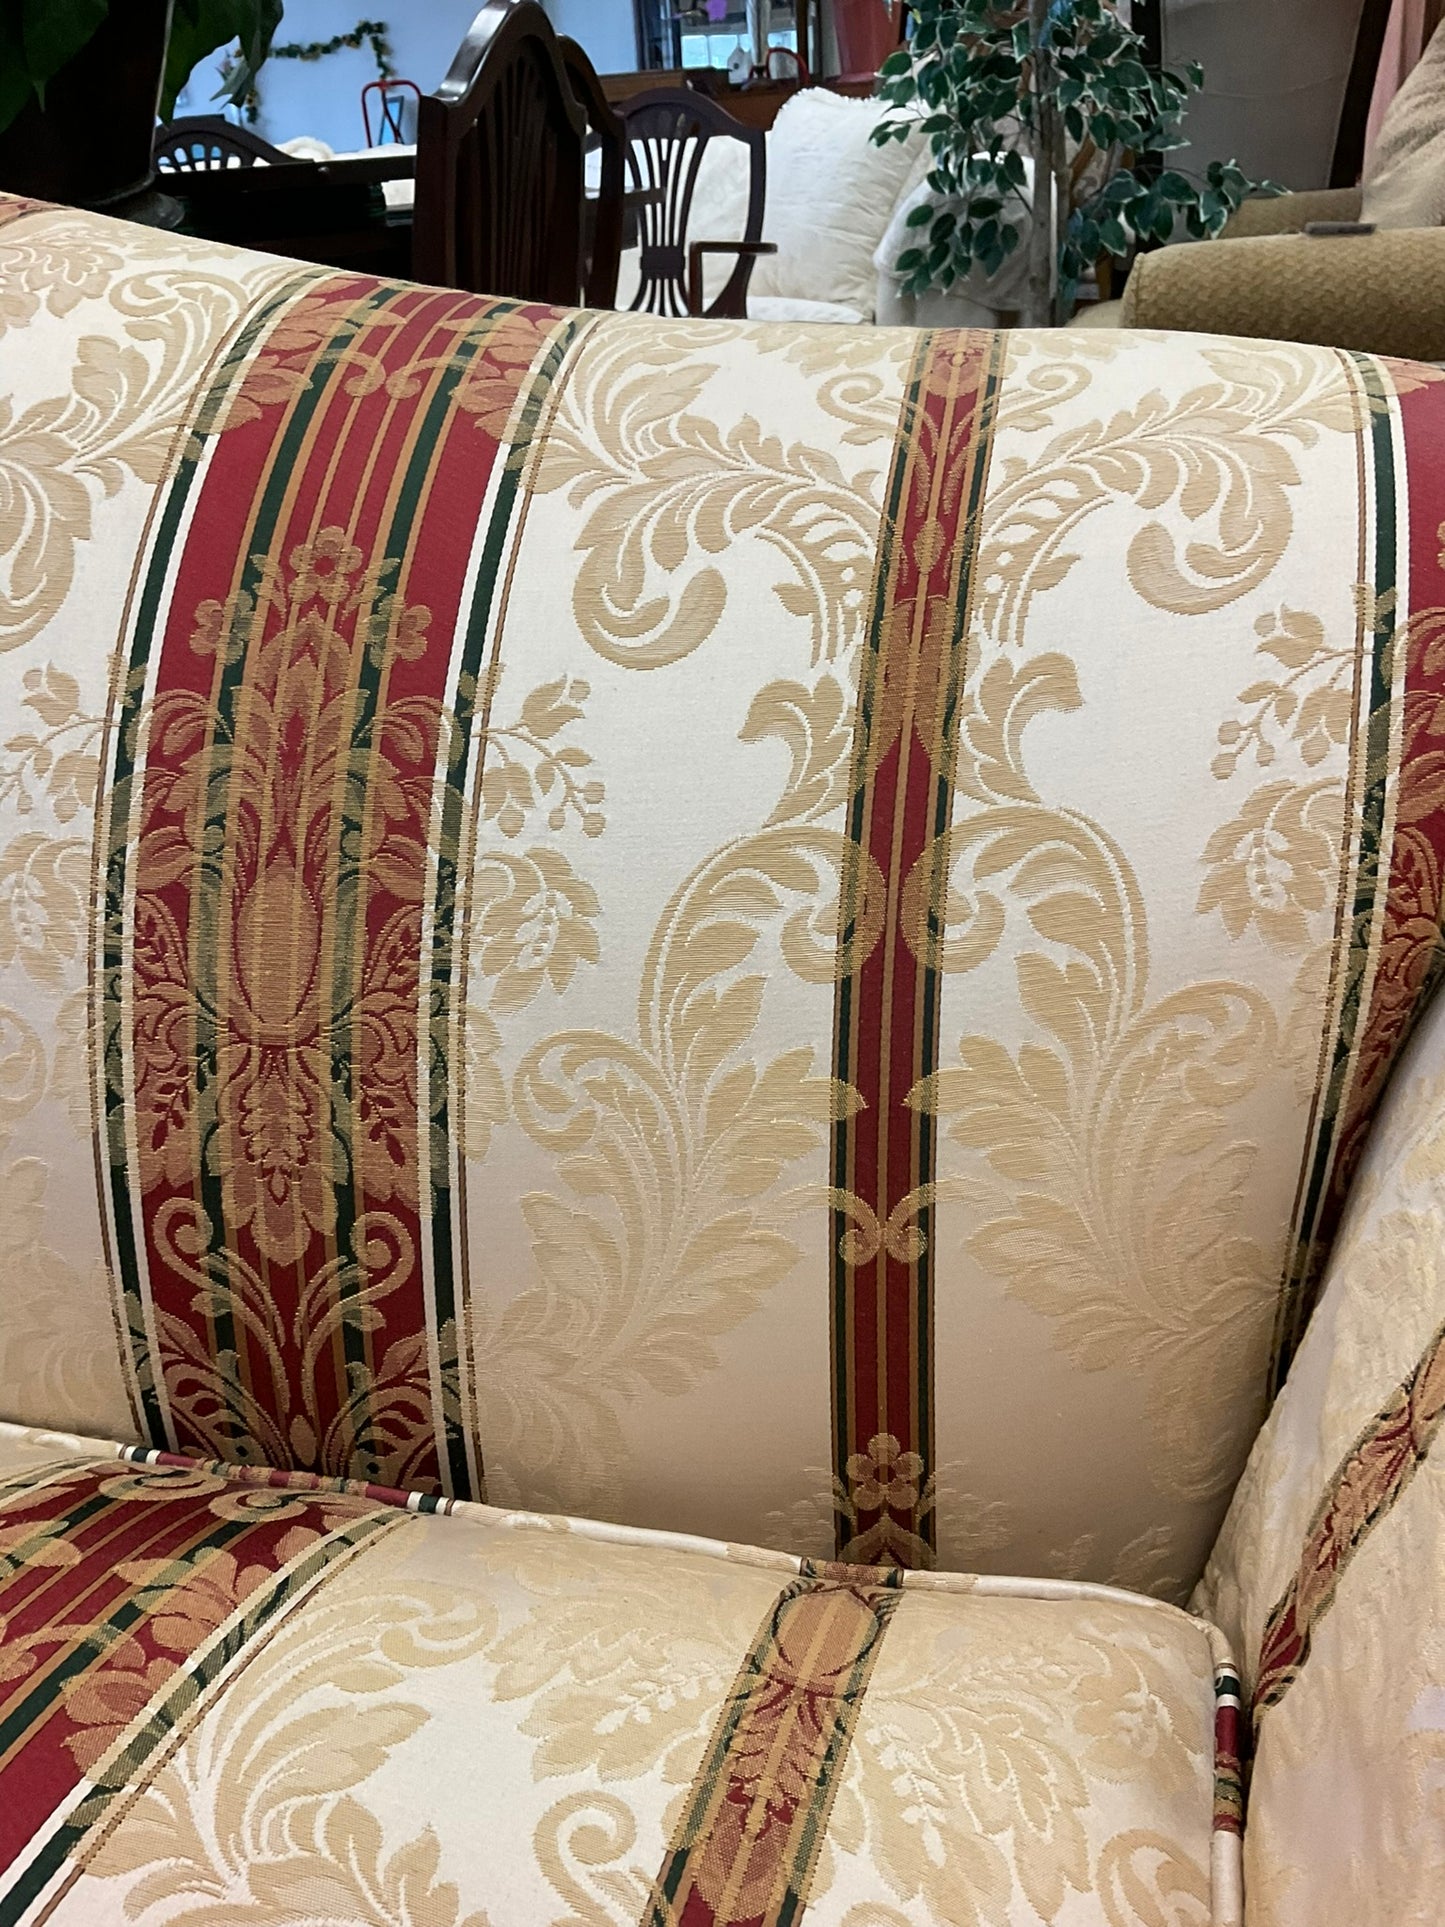 Custom Designed Sofa With Matching Ottoman